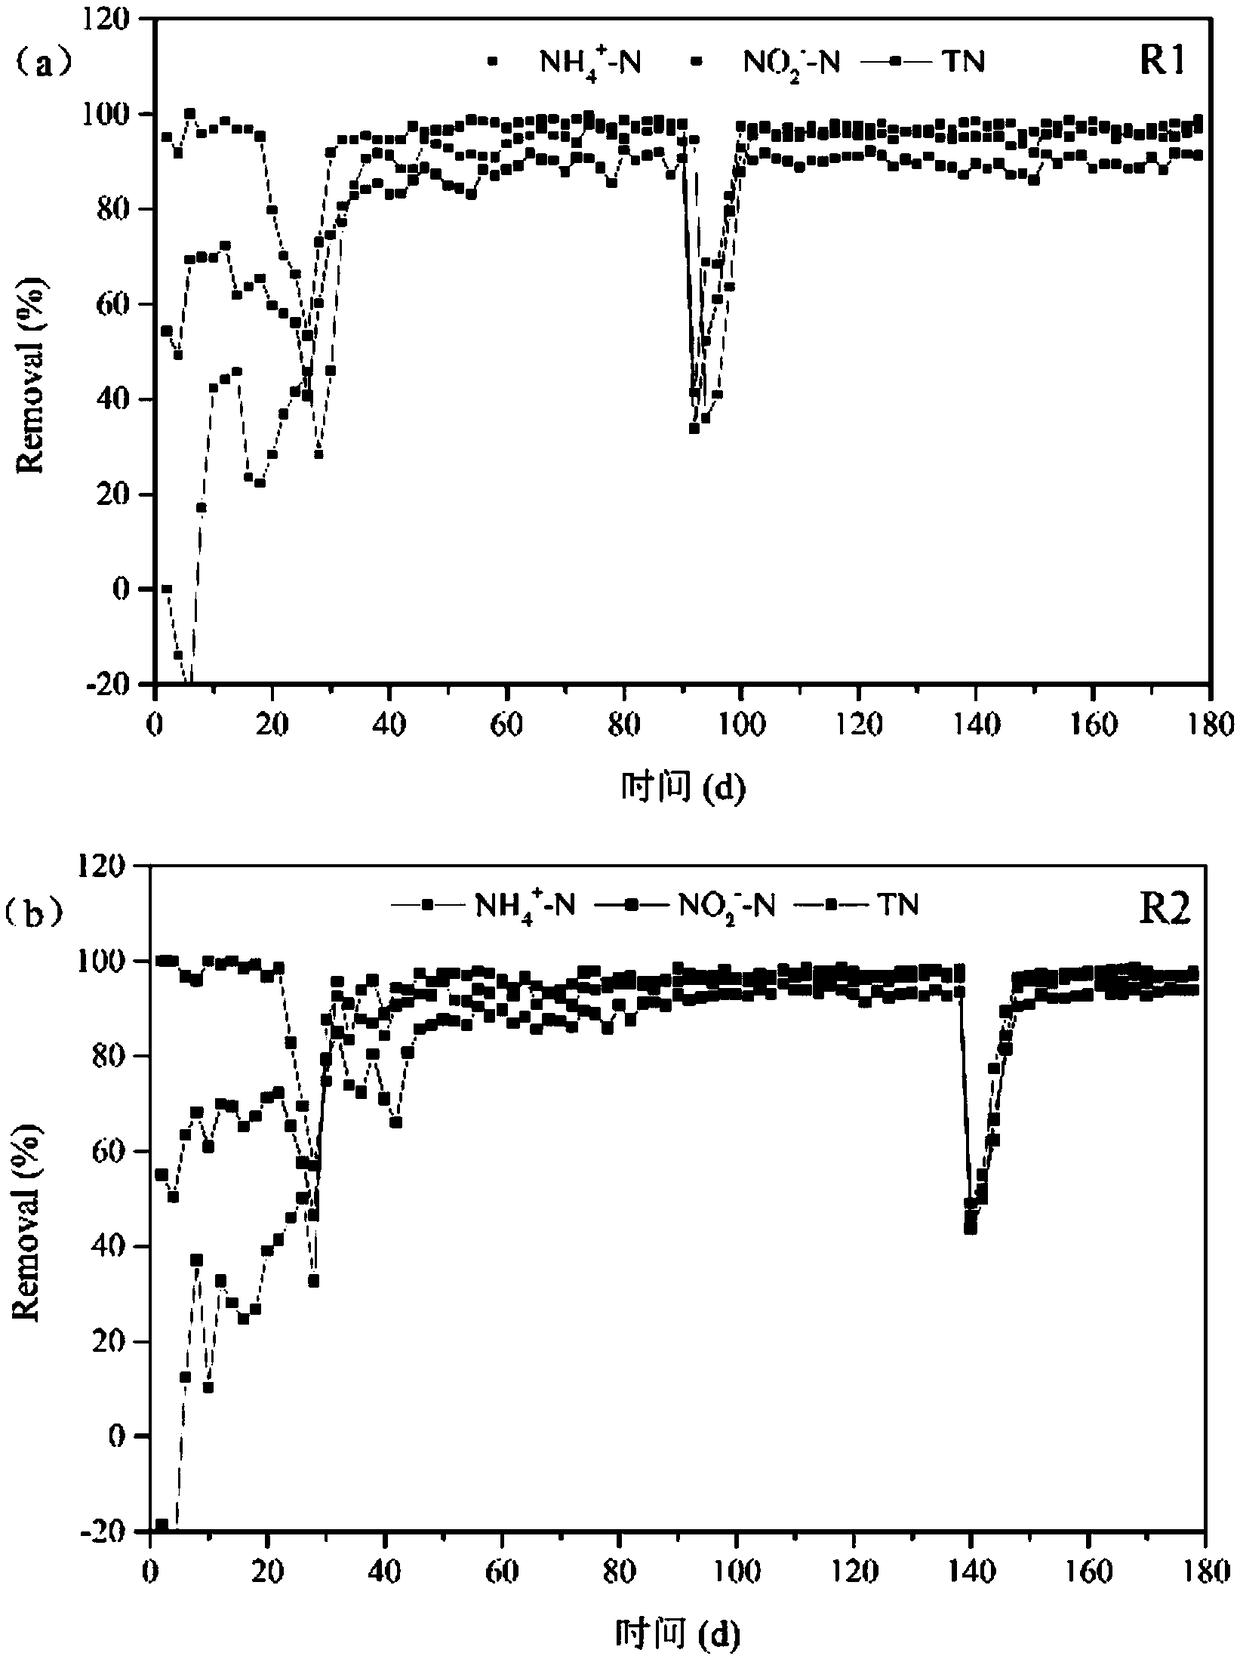 Iron ion reinforced anaerobic ammonia oxidation denitrification process